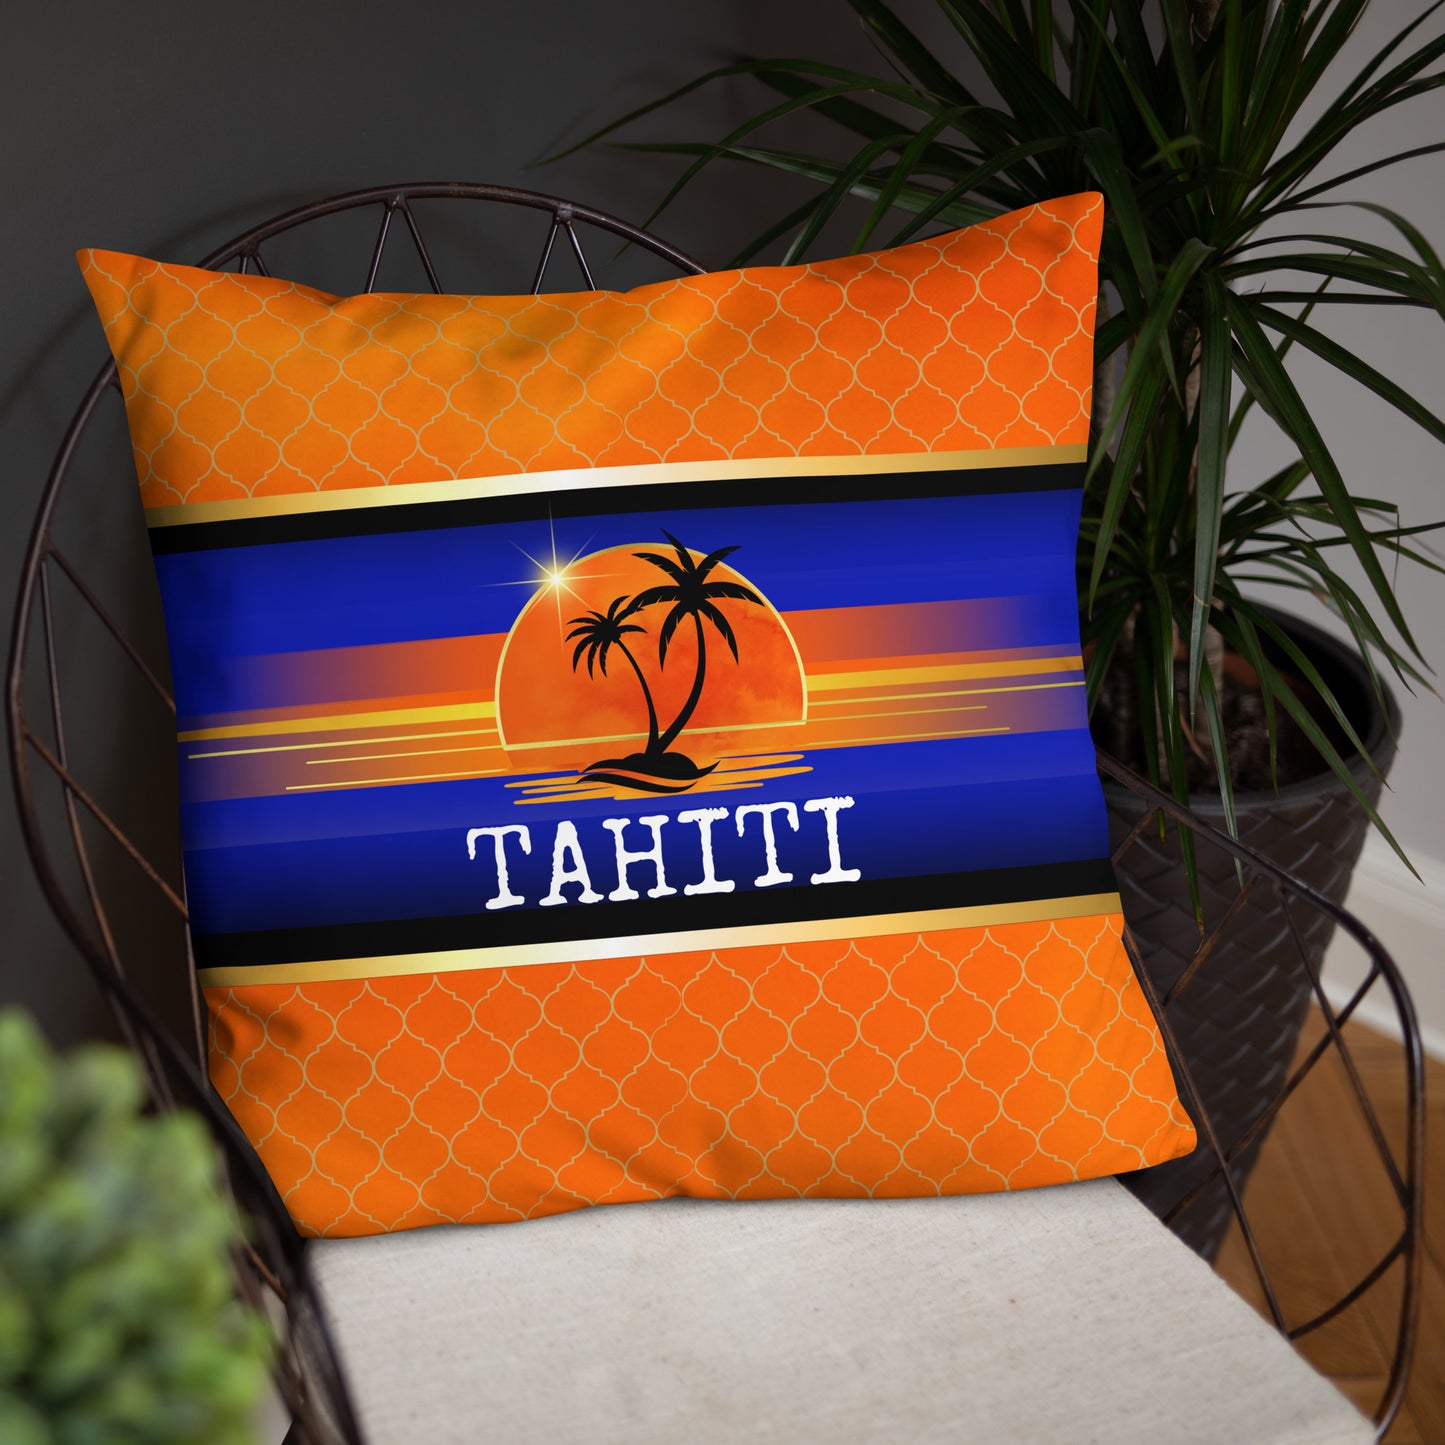 Tahiti Travel Gift | Tahiti Vacation Gift | Tahiti Travel Souvenir | Tahiti Vacation Memento | Tahiti Home Décor | Keepsake Souvenir Gift | Travel Vacation Gift | World Travel Gift Pillow